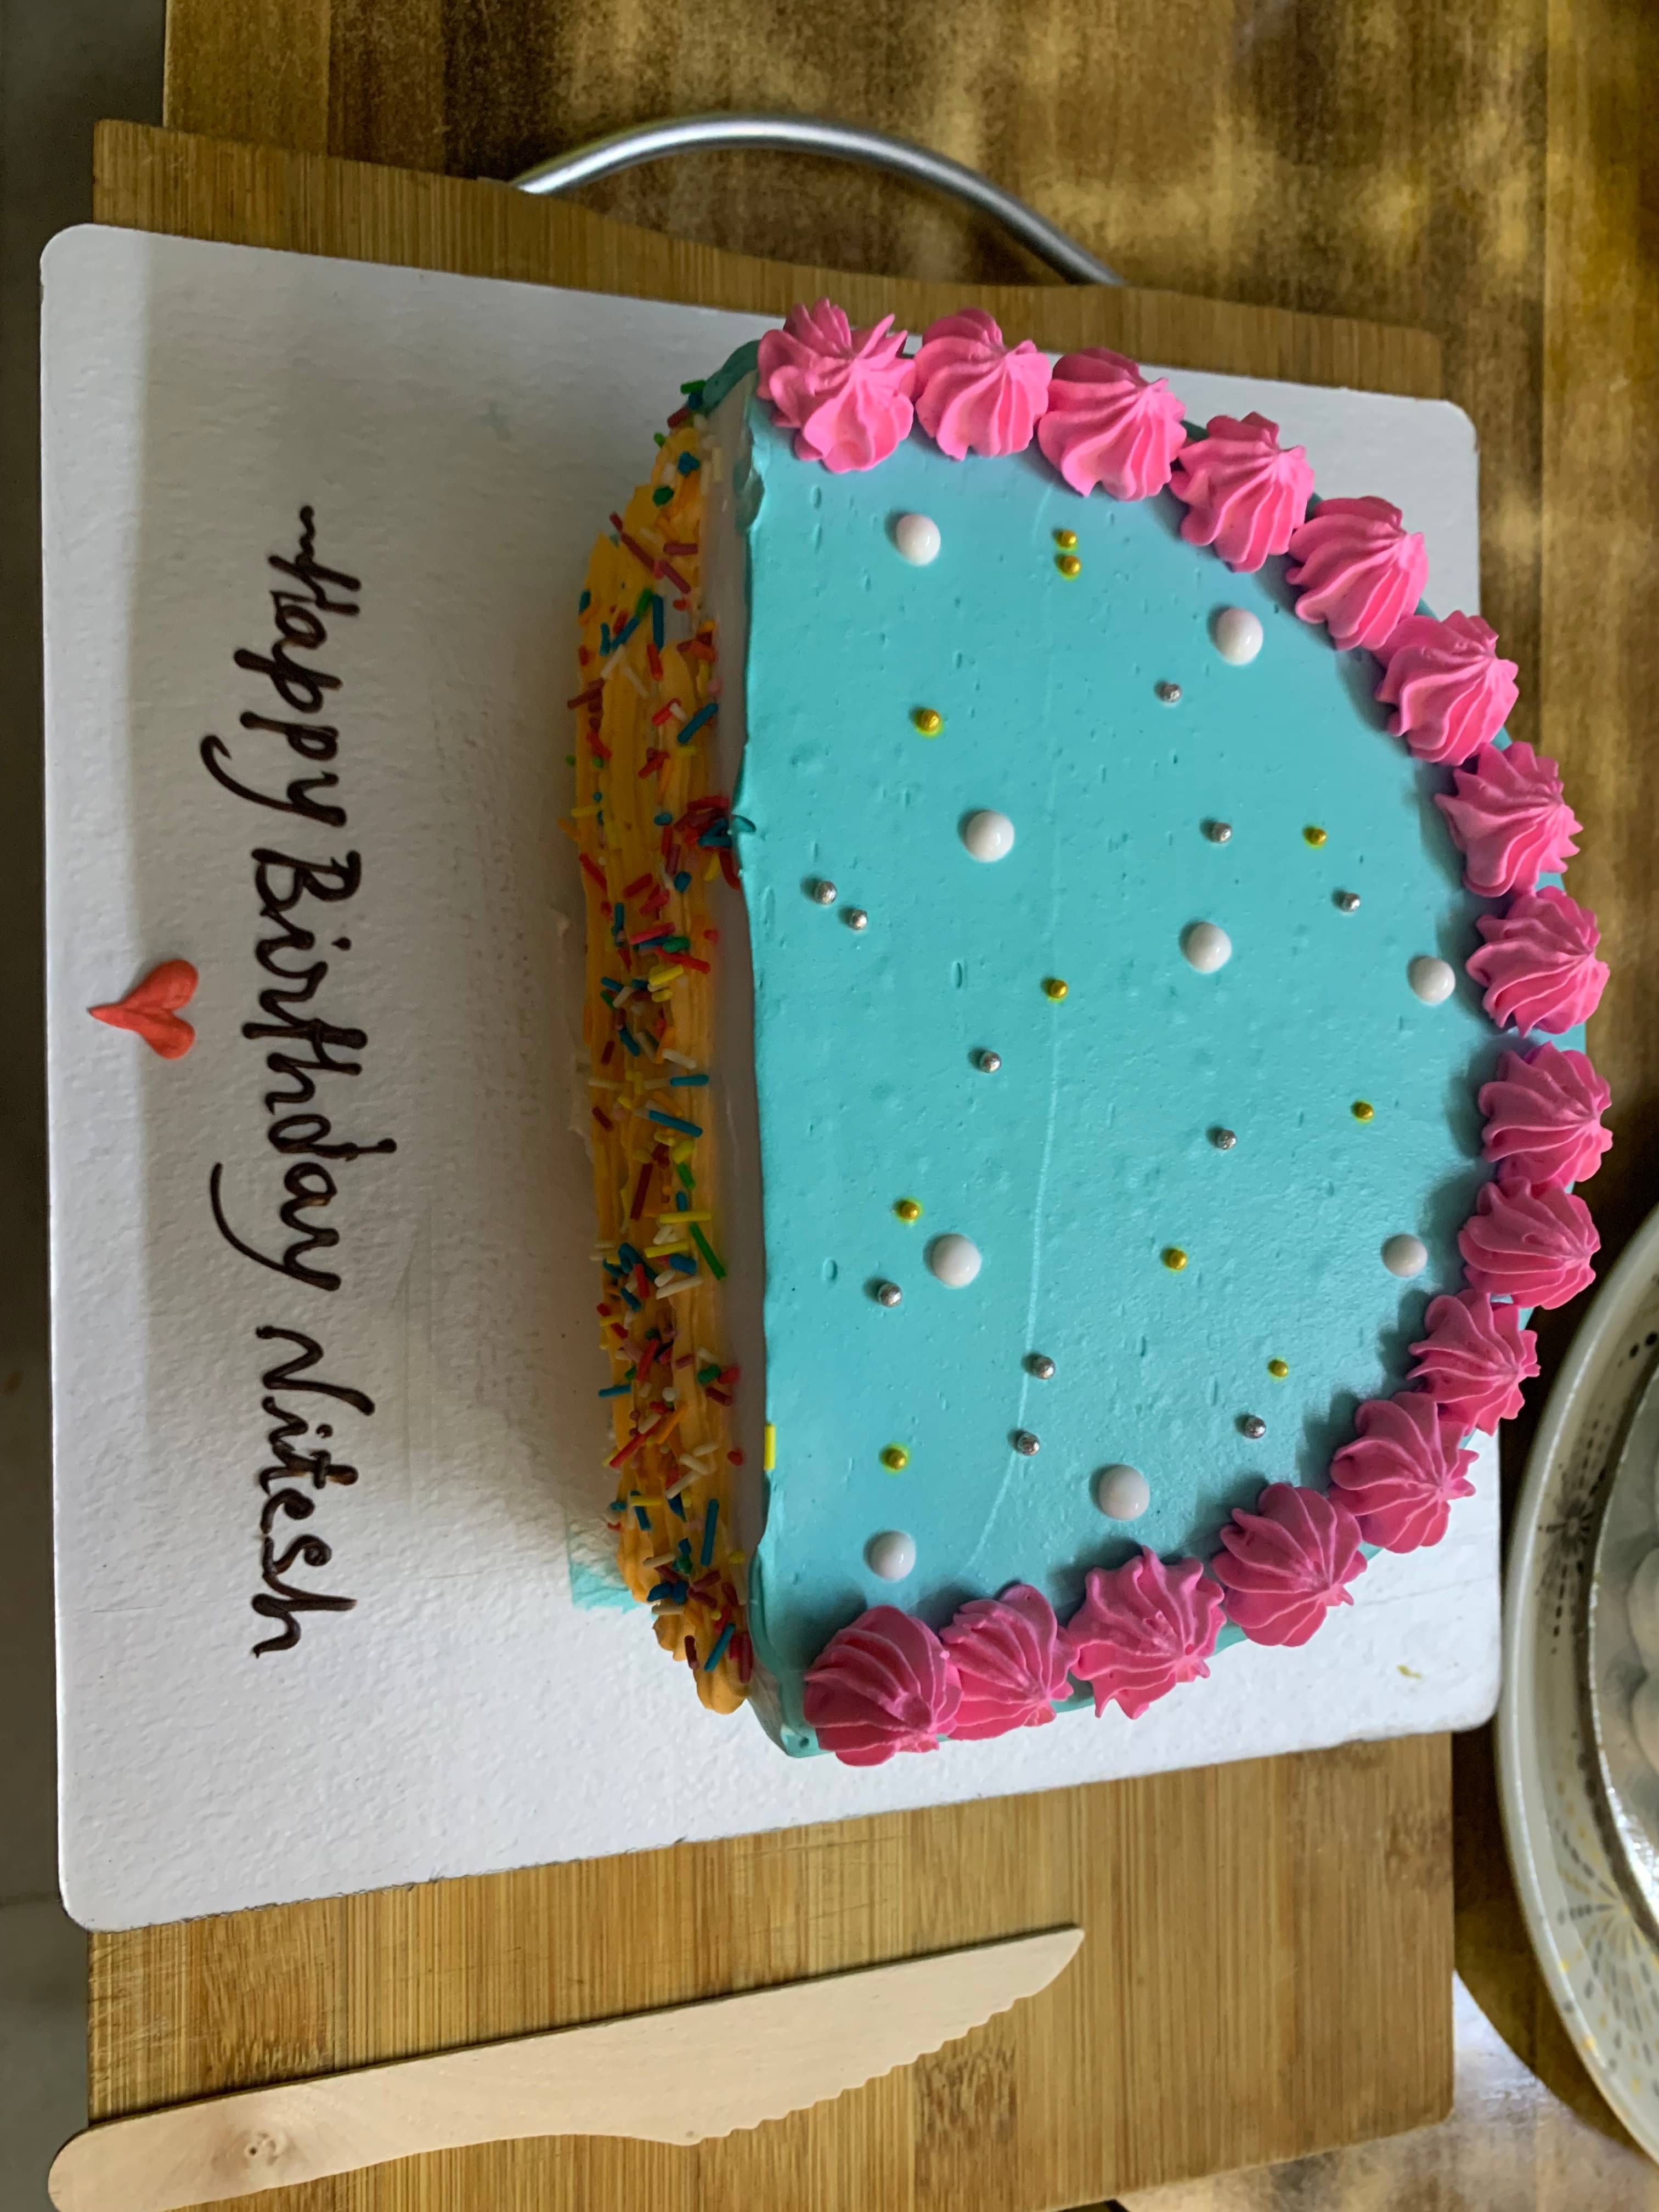 Nitish Happy Birthday Cakes Pics Gallery